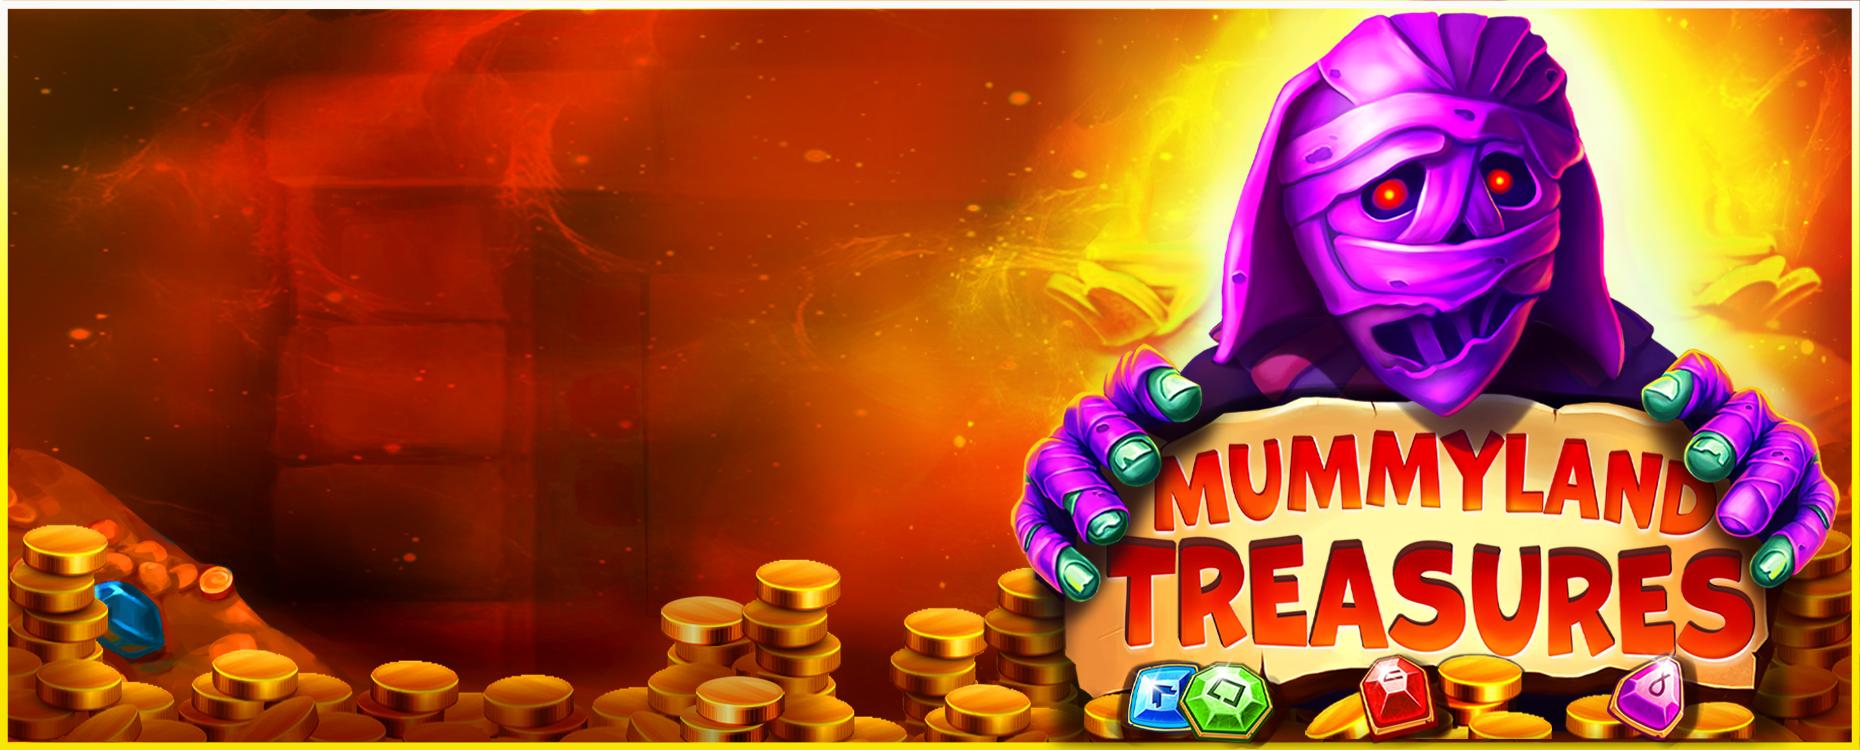 Mummyland Treasures | Промо-материалы | Игровой автомат онлайн